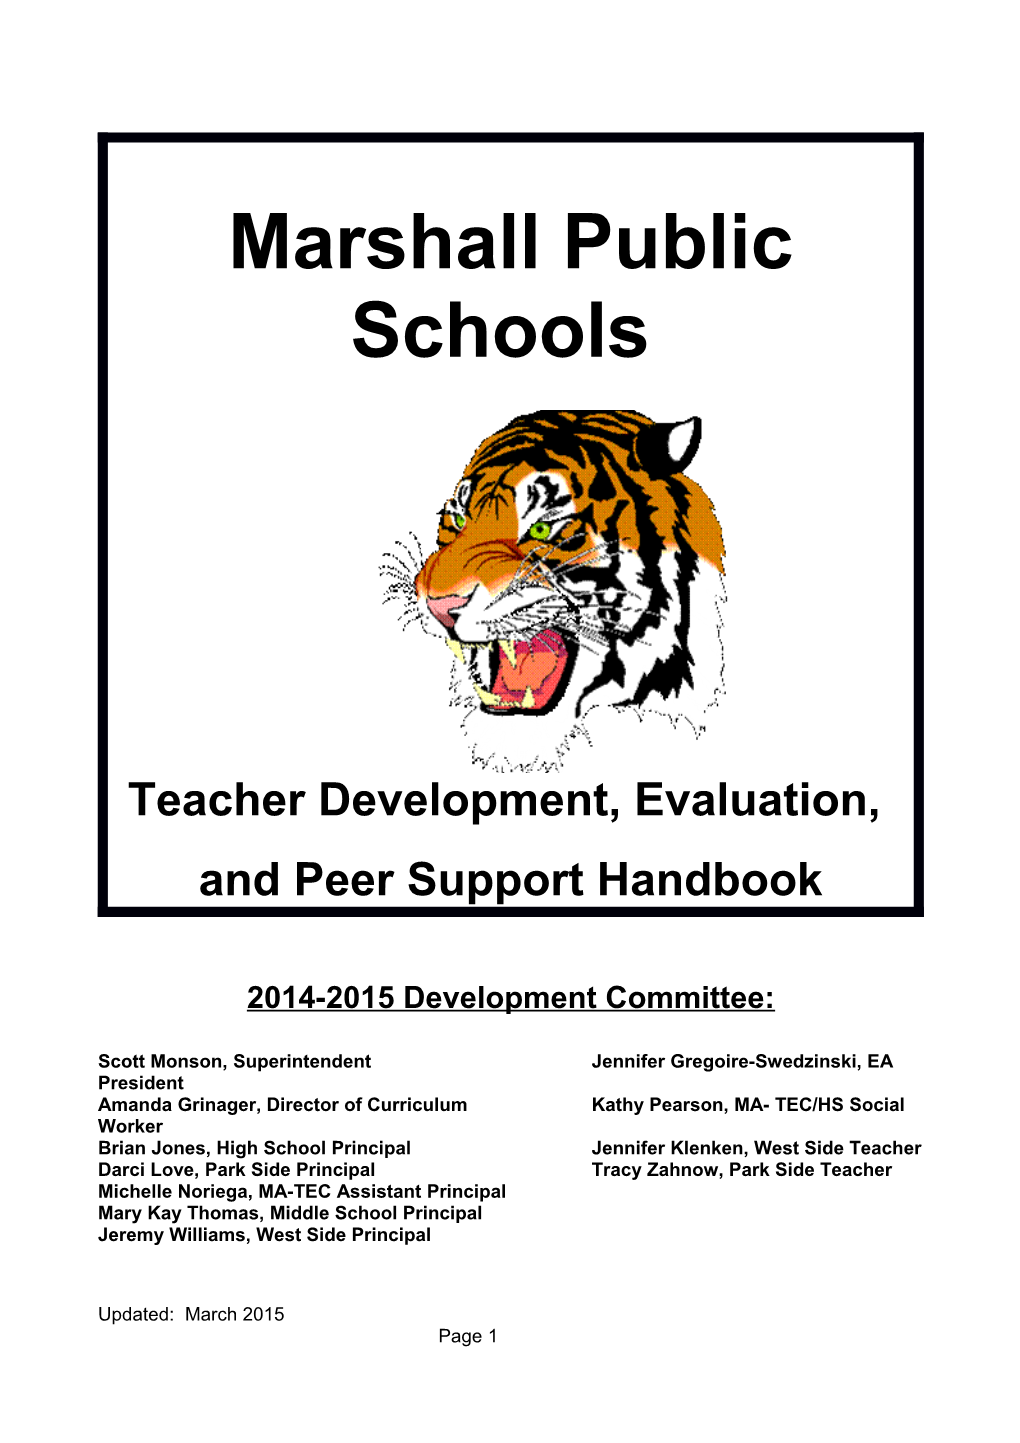 And Peer Support Handbook